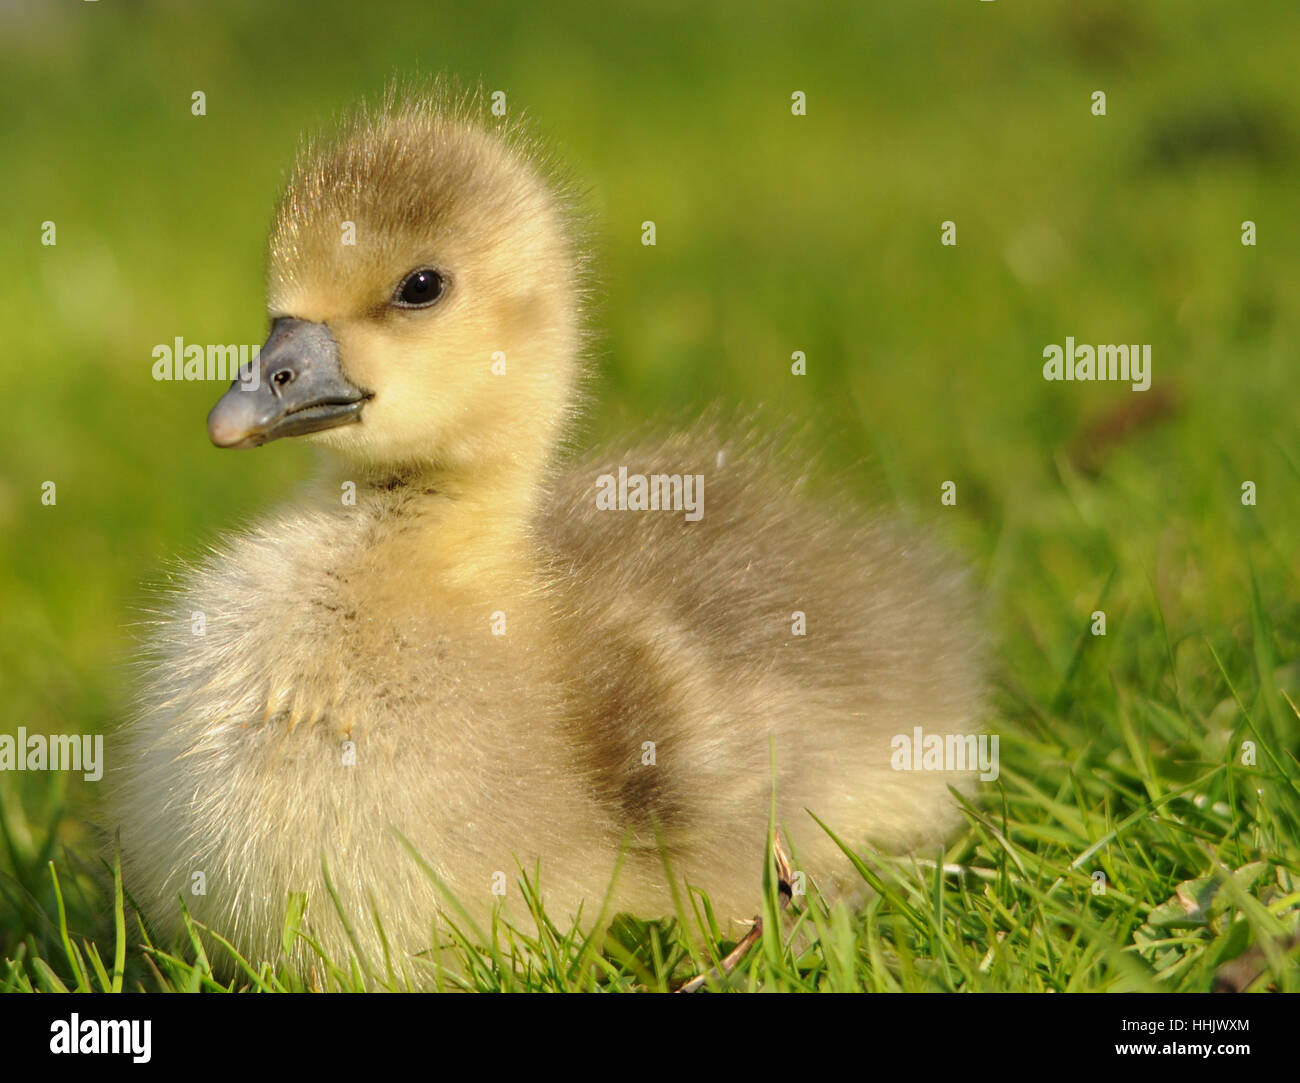 offspring, duck, chick, bird, birds, spring, offspring, duck, chick, goose, Stock Photo